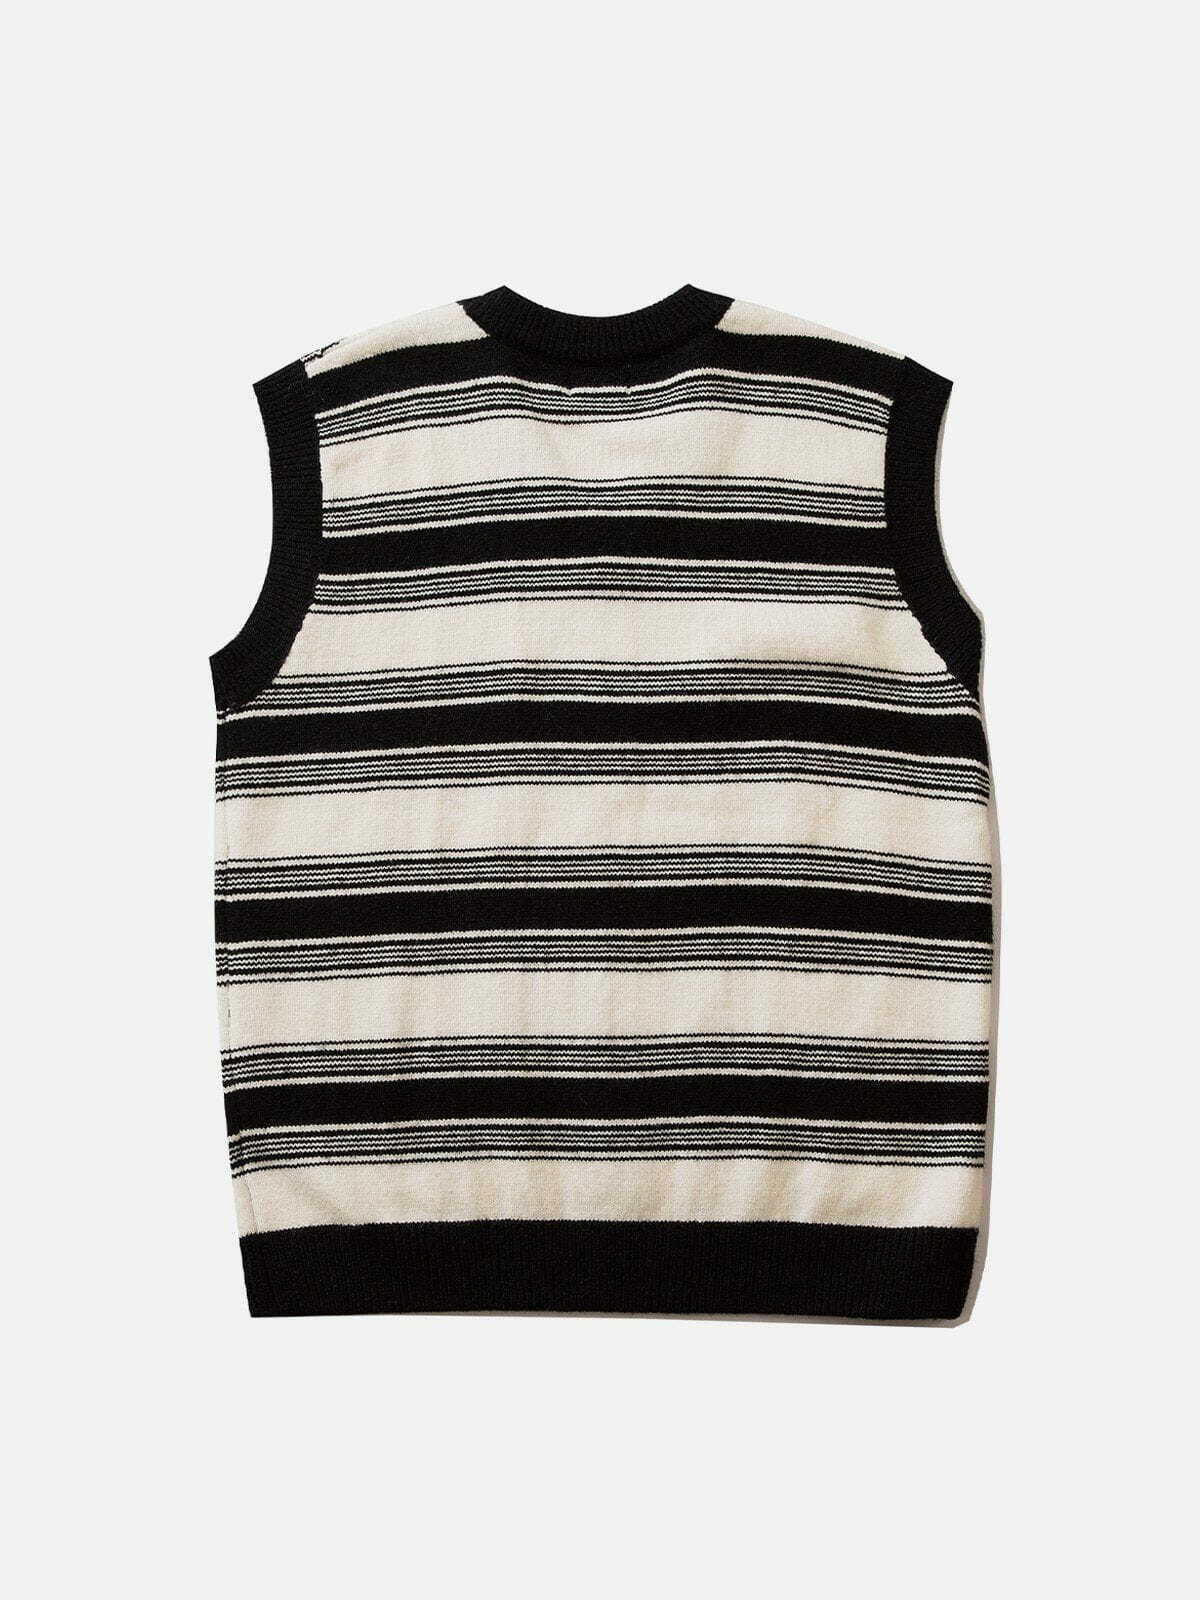 colorblock stripe sweater vest edgy retro statement piece 3219